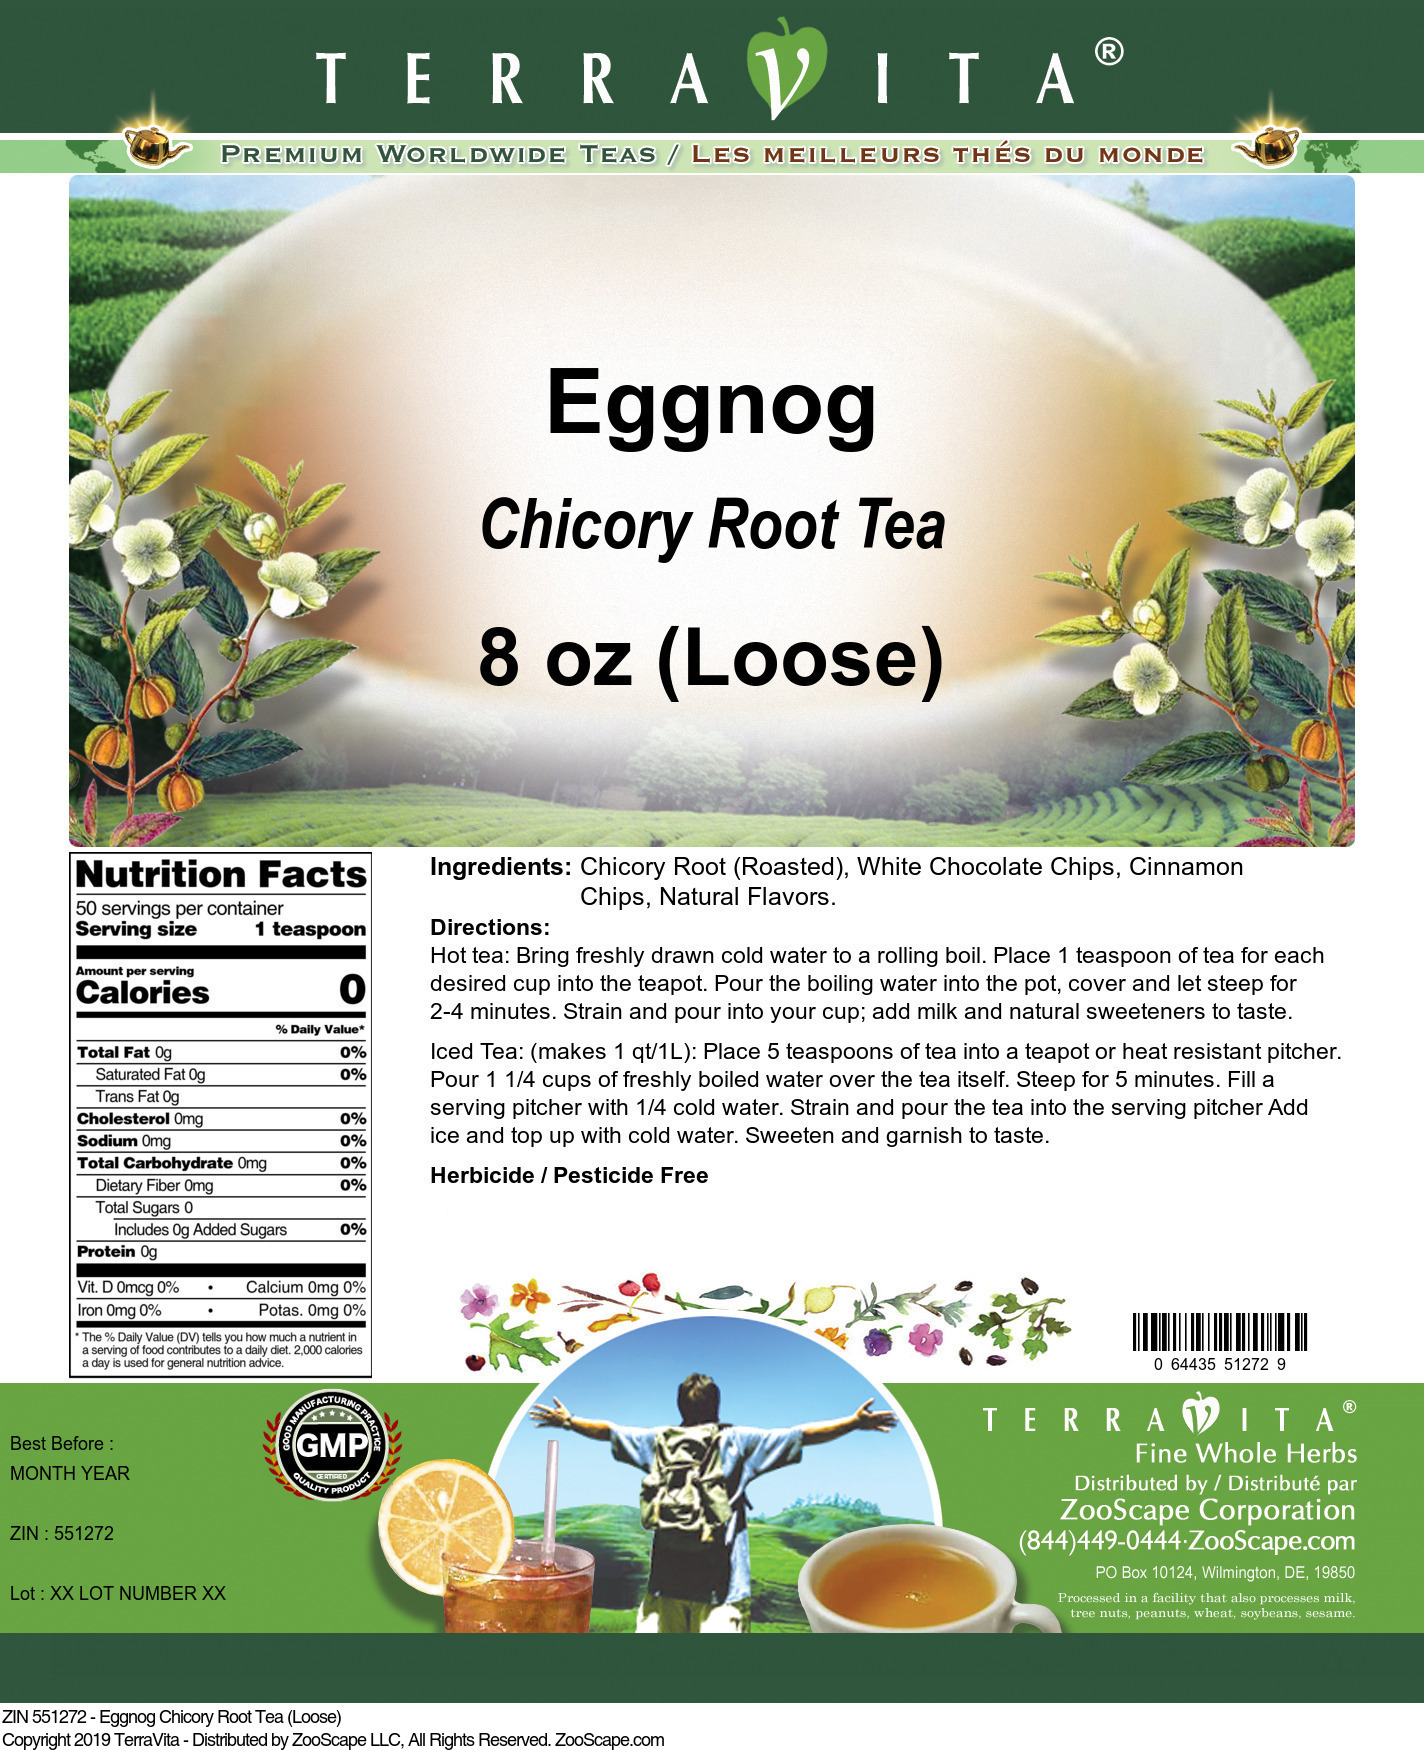 Eggnog Chicory Root Tea (Loose) - Label